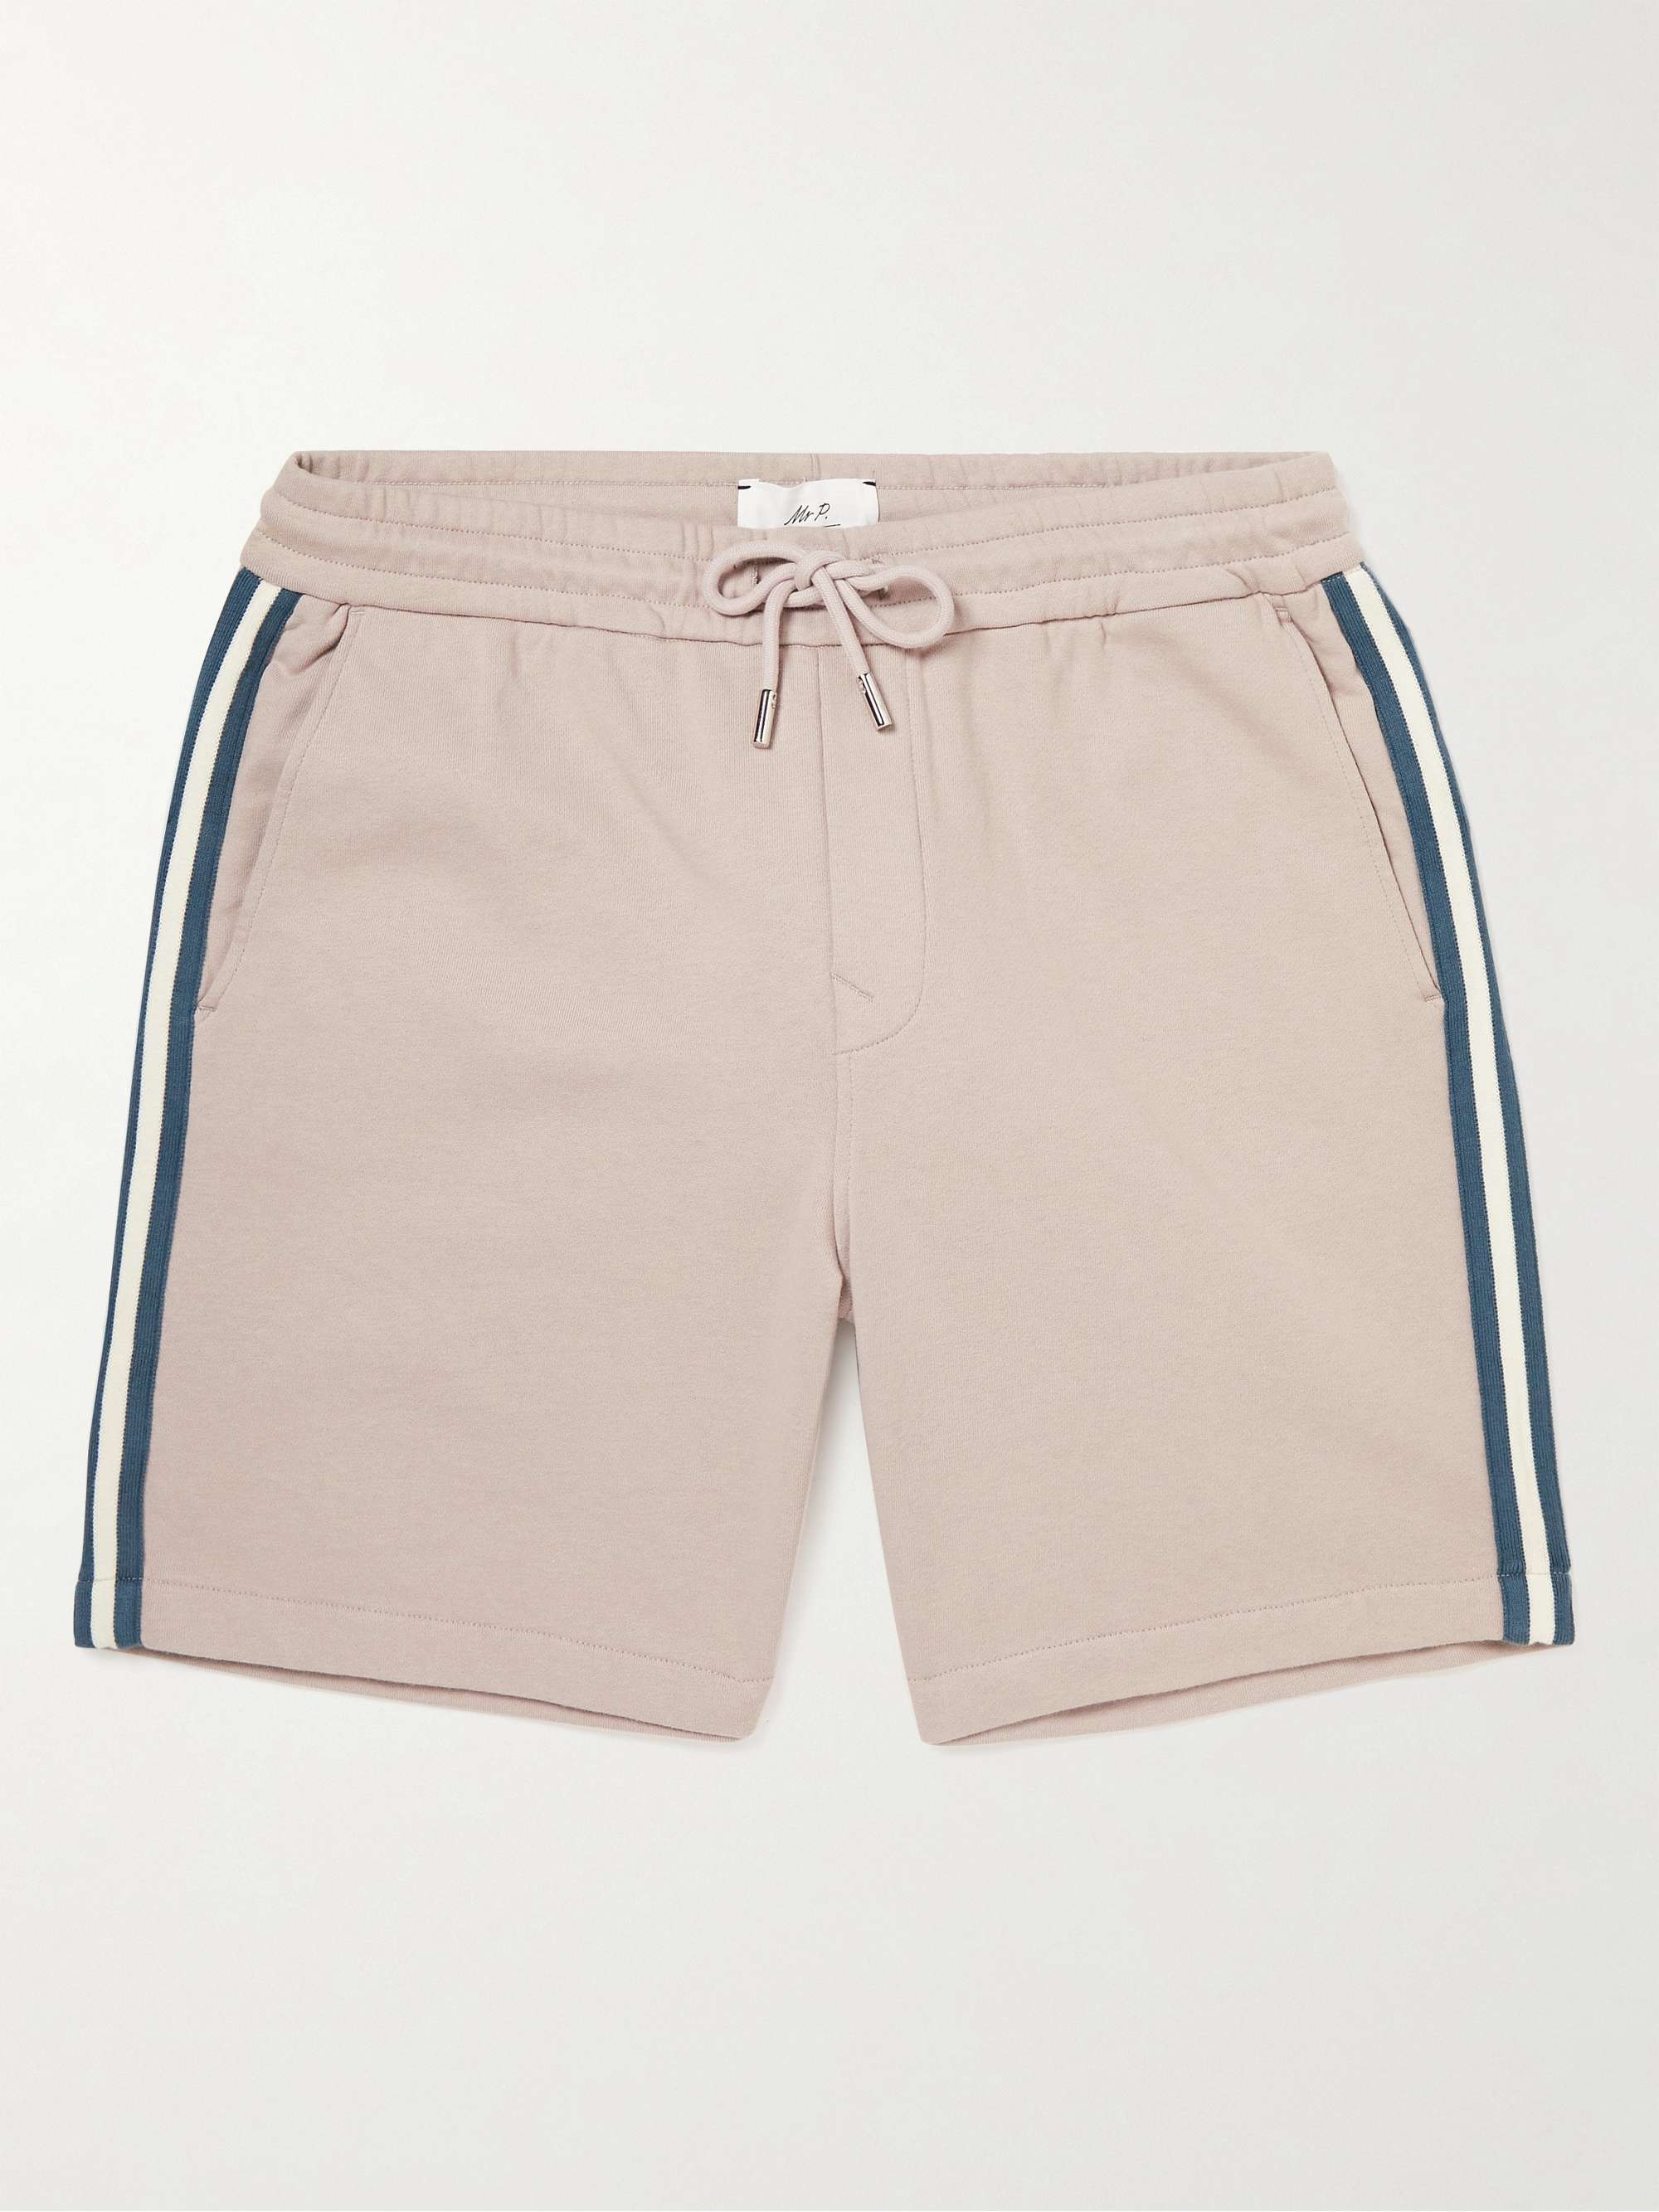 MR P. Striped Organic Cotton-Jersey Drawstring Shorts for Men | MR PORTER